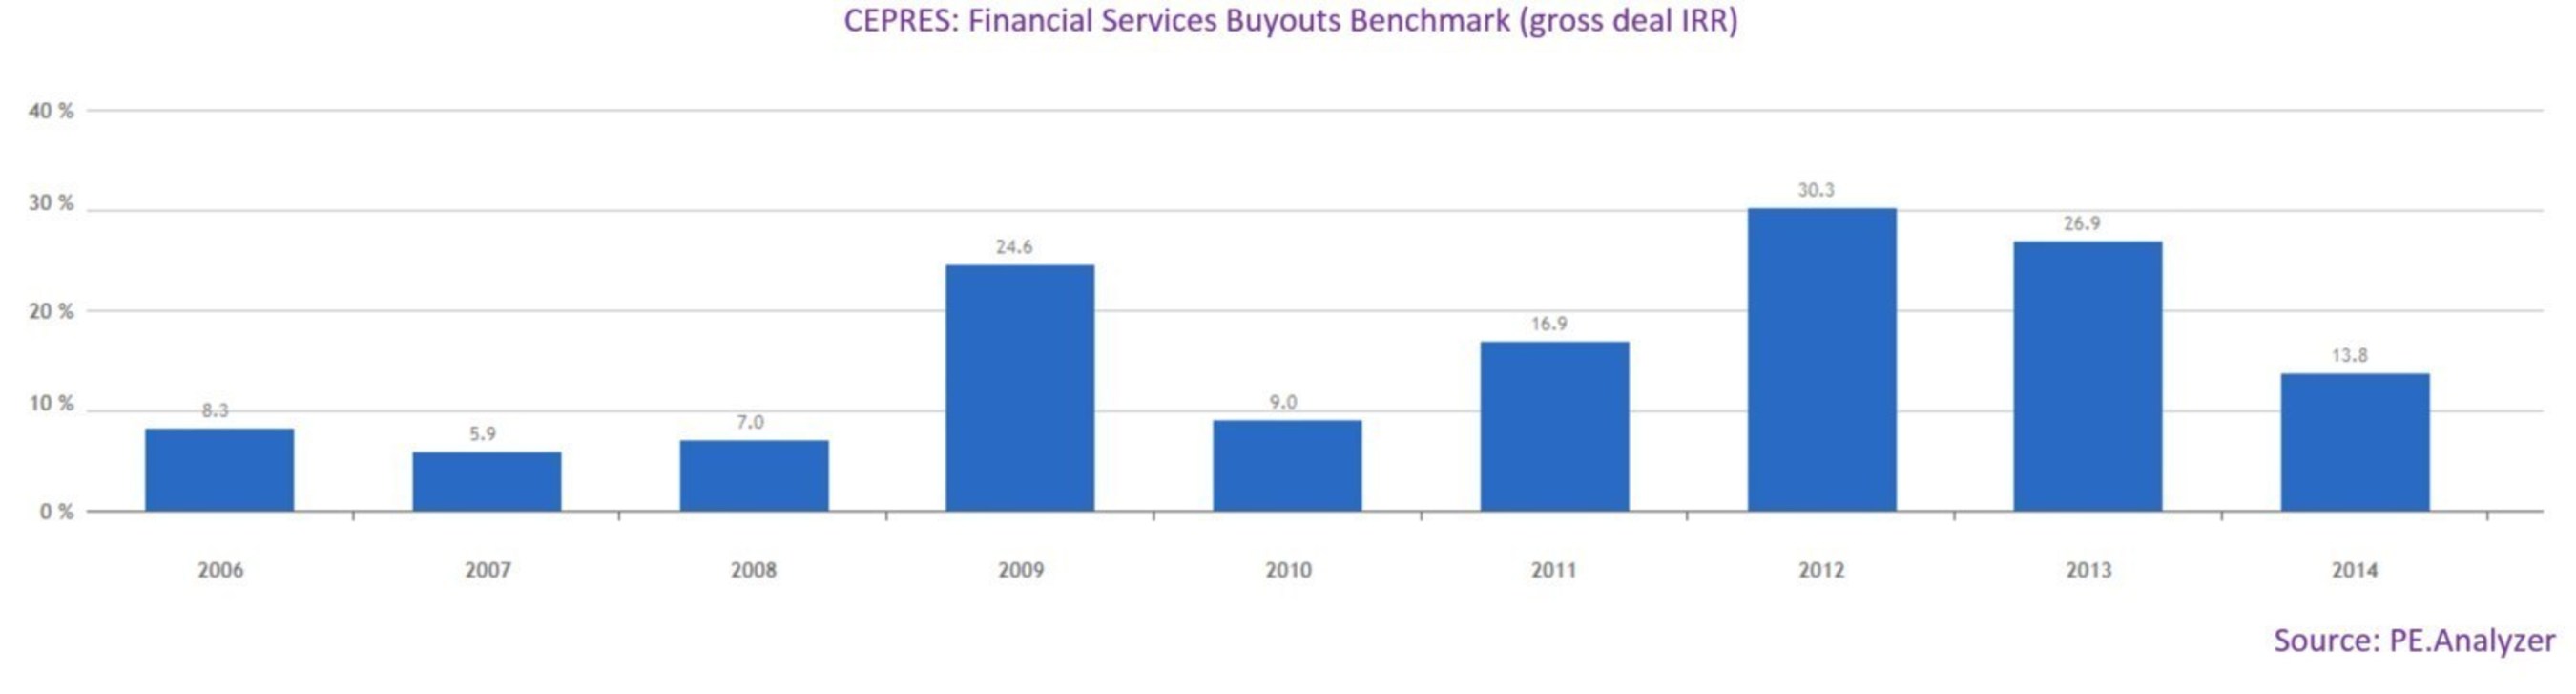 CEPRES: Financial Services Buyouts Benchmark